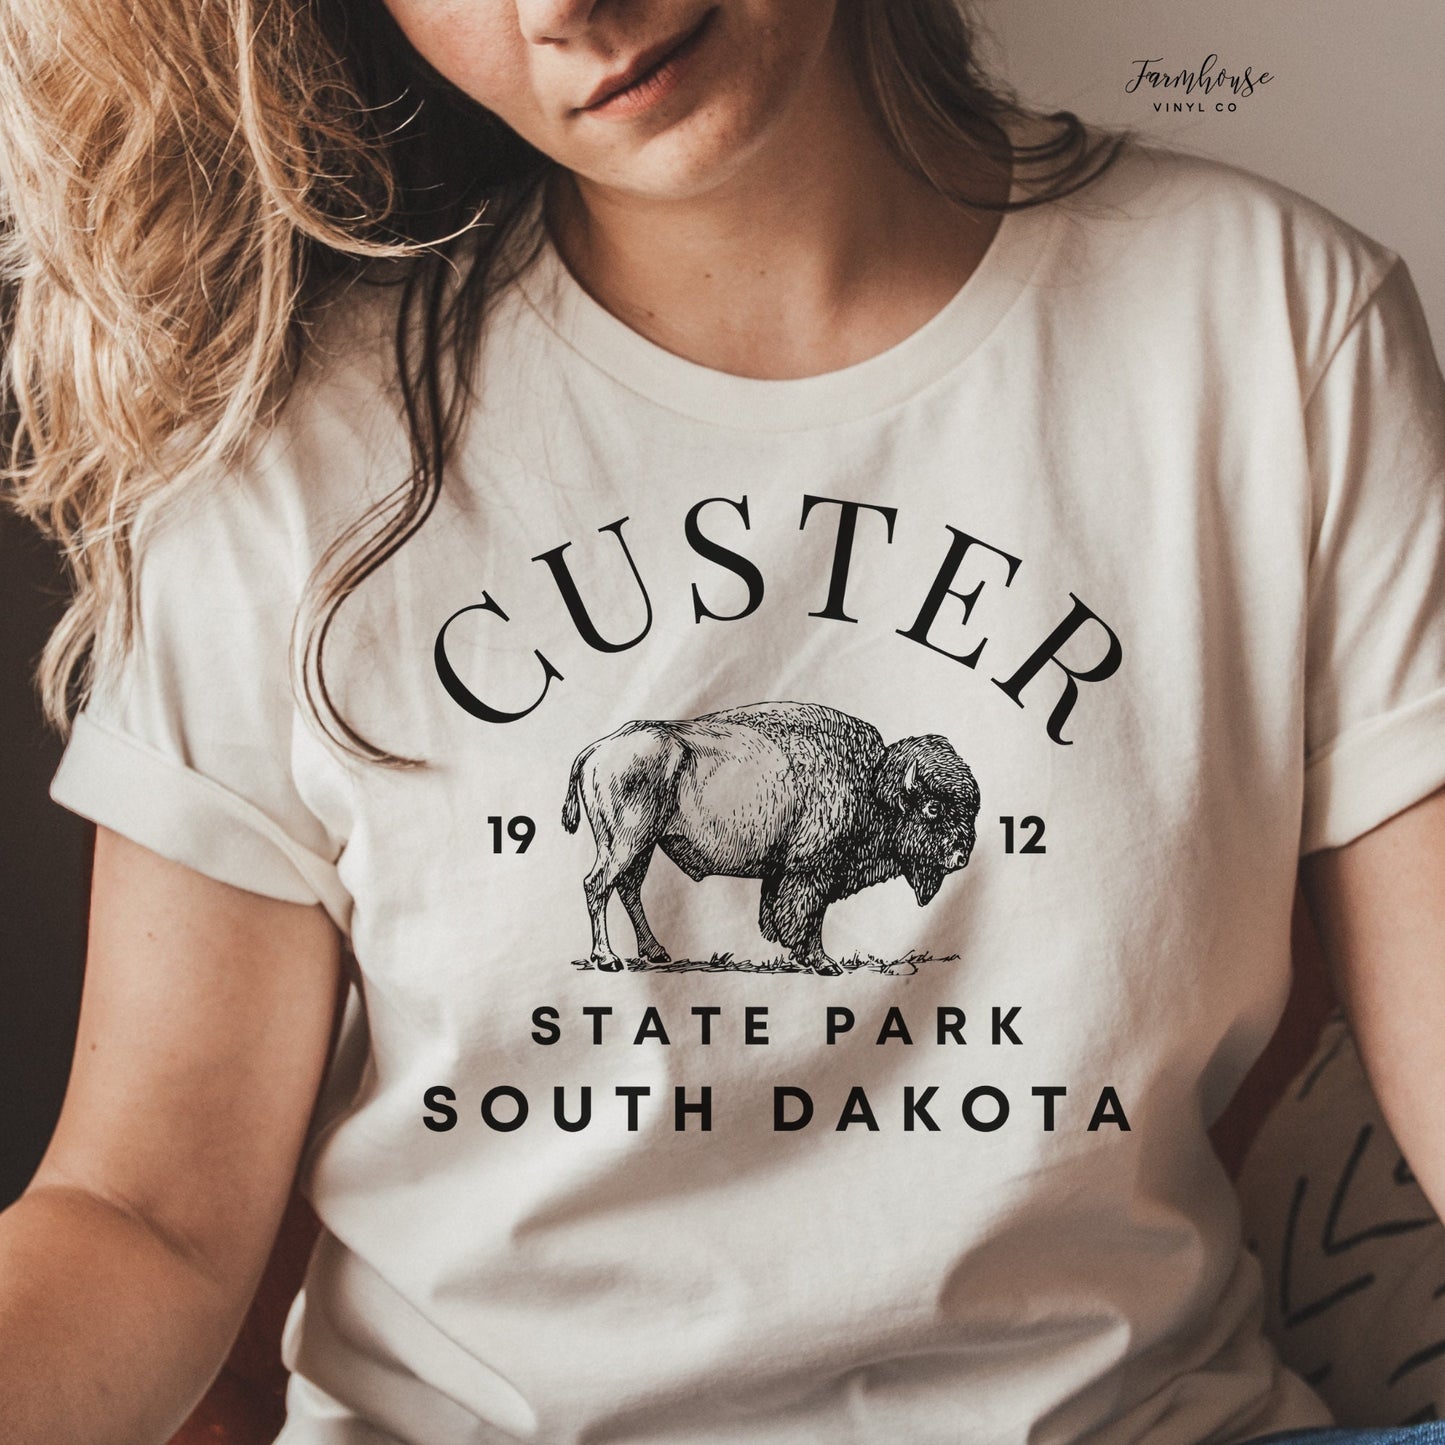 Custer State Park Shirt - Farmhouse Vinyl Co